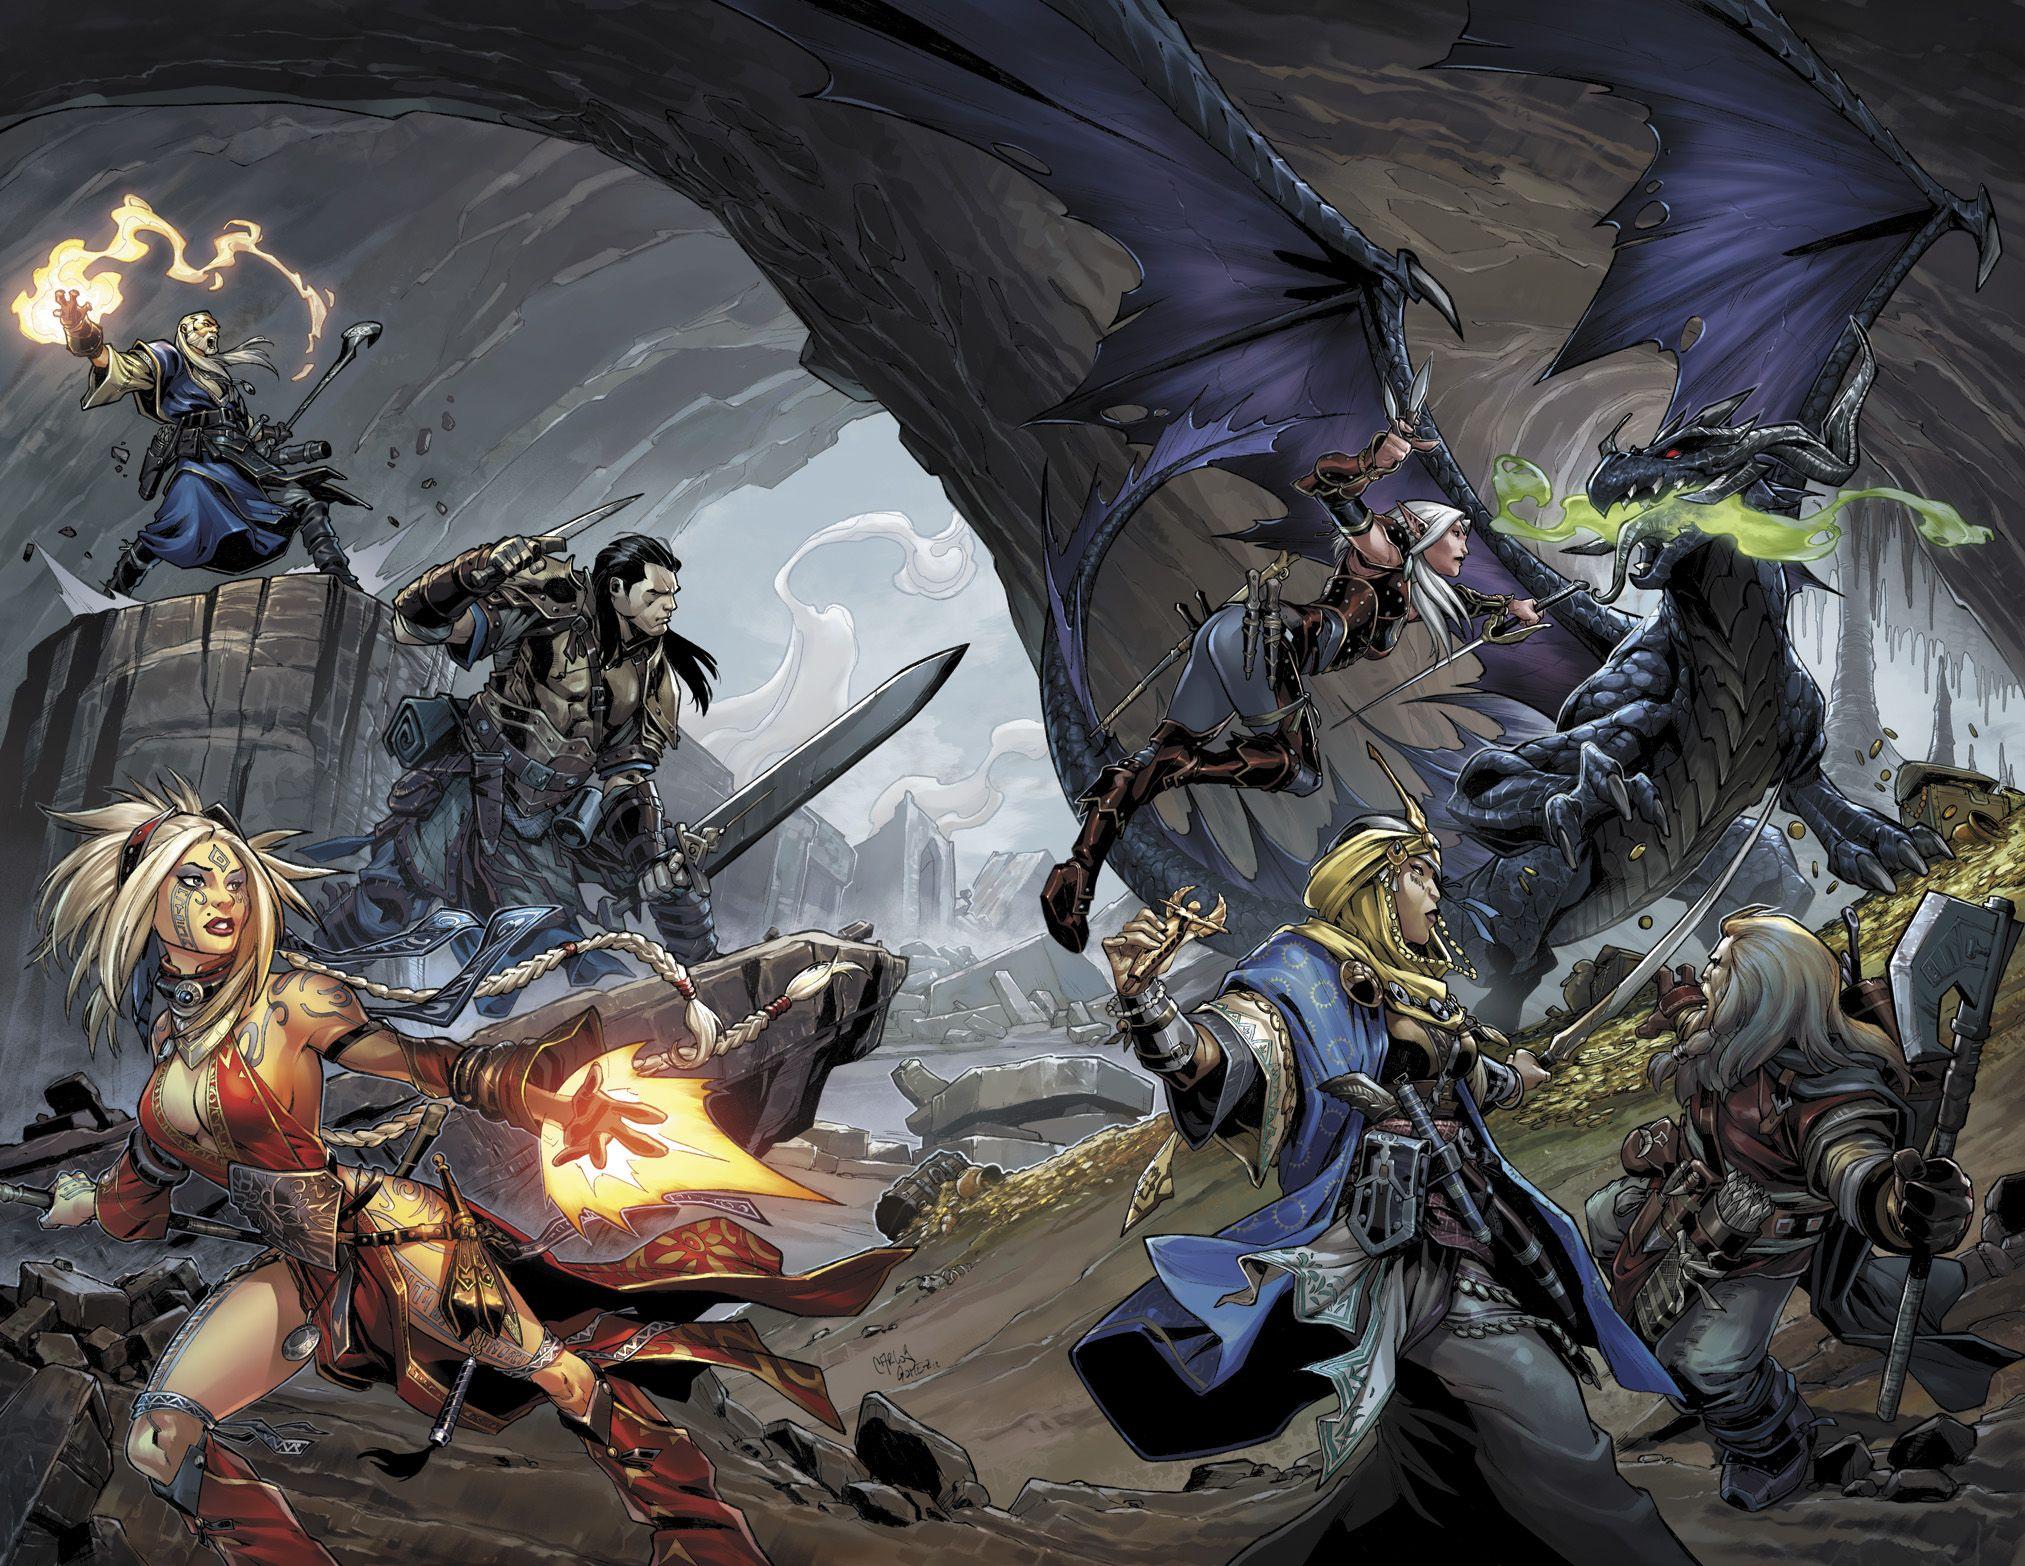 Heros vs Monsters fighting in a dungeon.